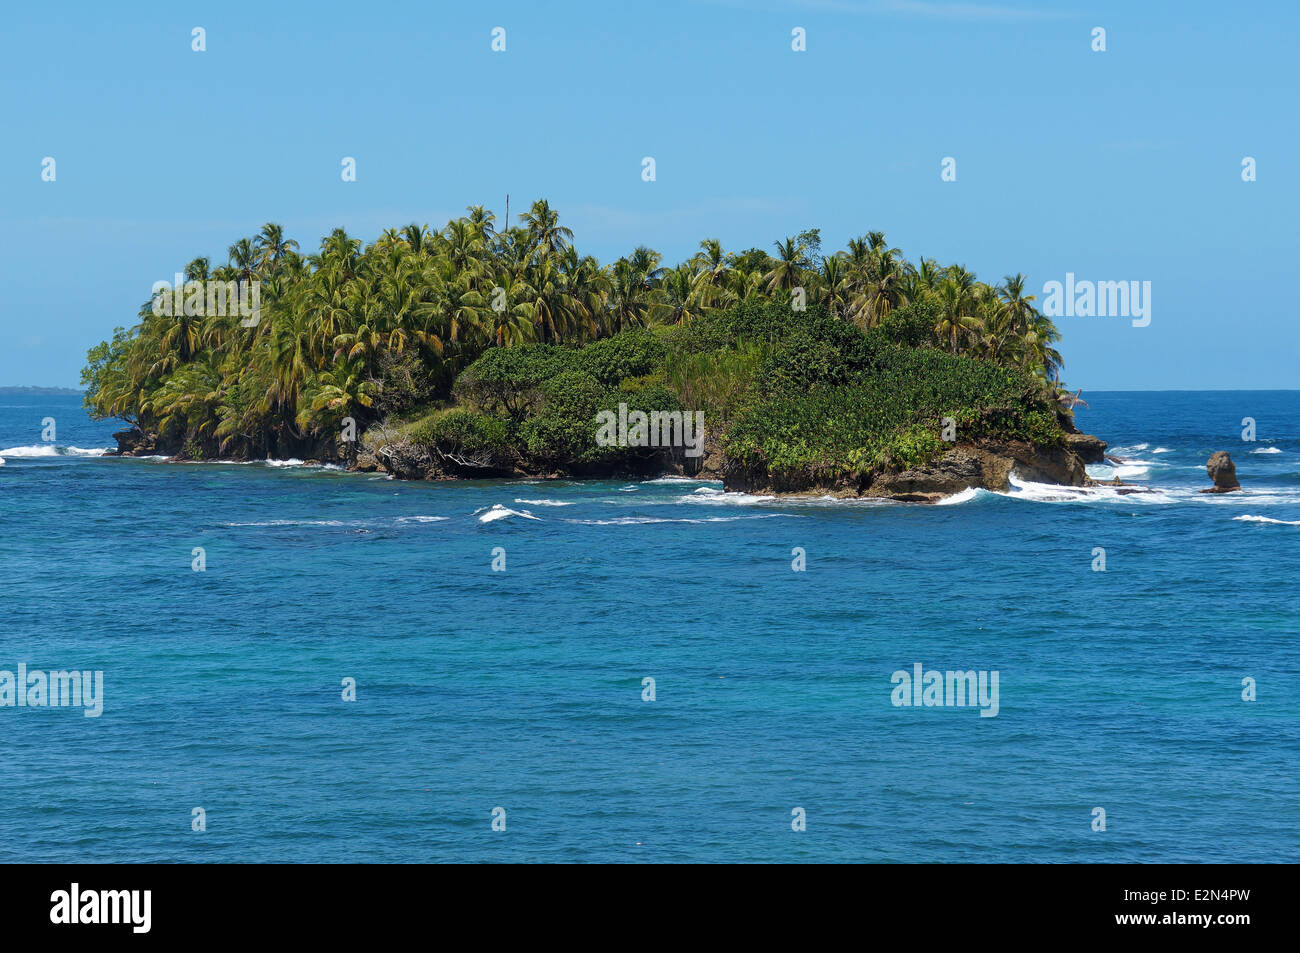 Untouched tropical island with lush vegetation in the Caribbean sea, Bocas del Toro archipelago, Panama Stock Photo